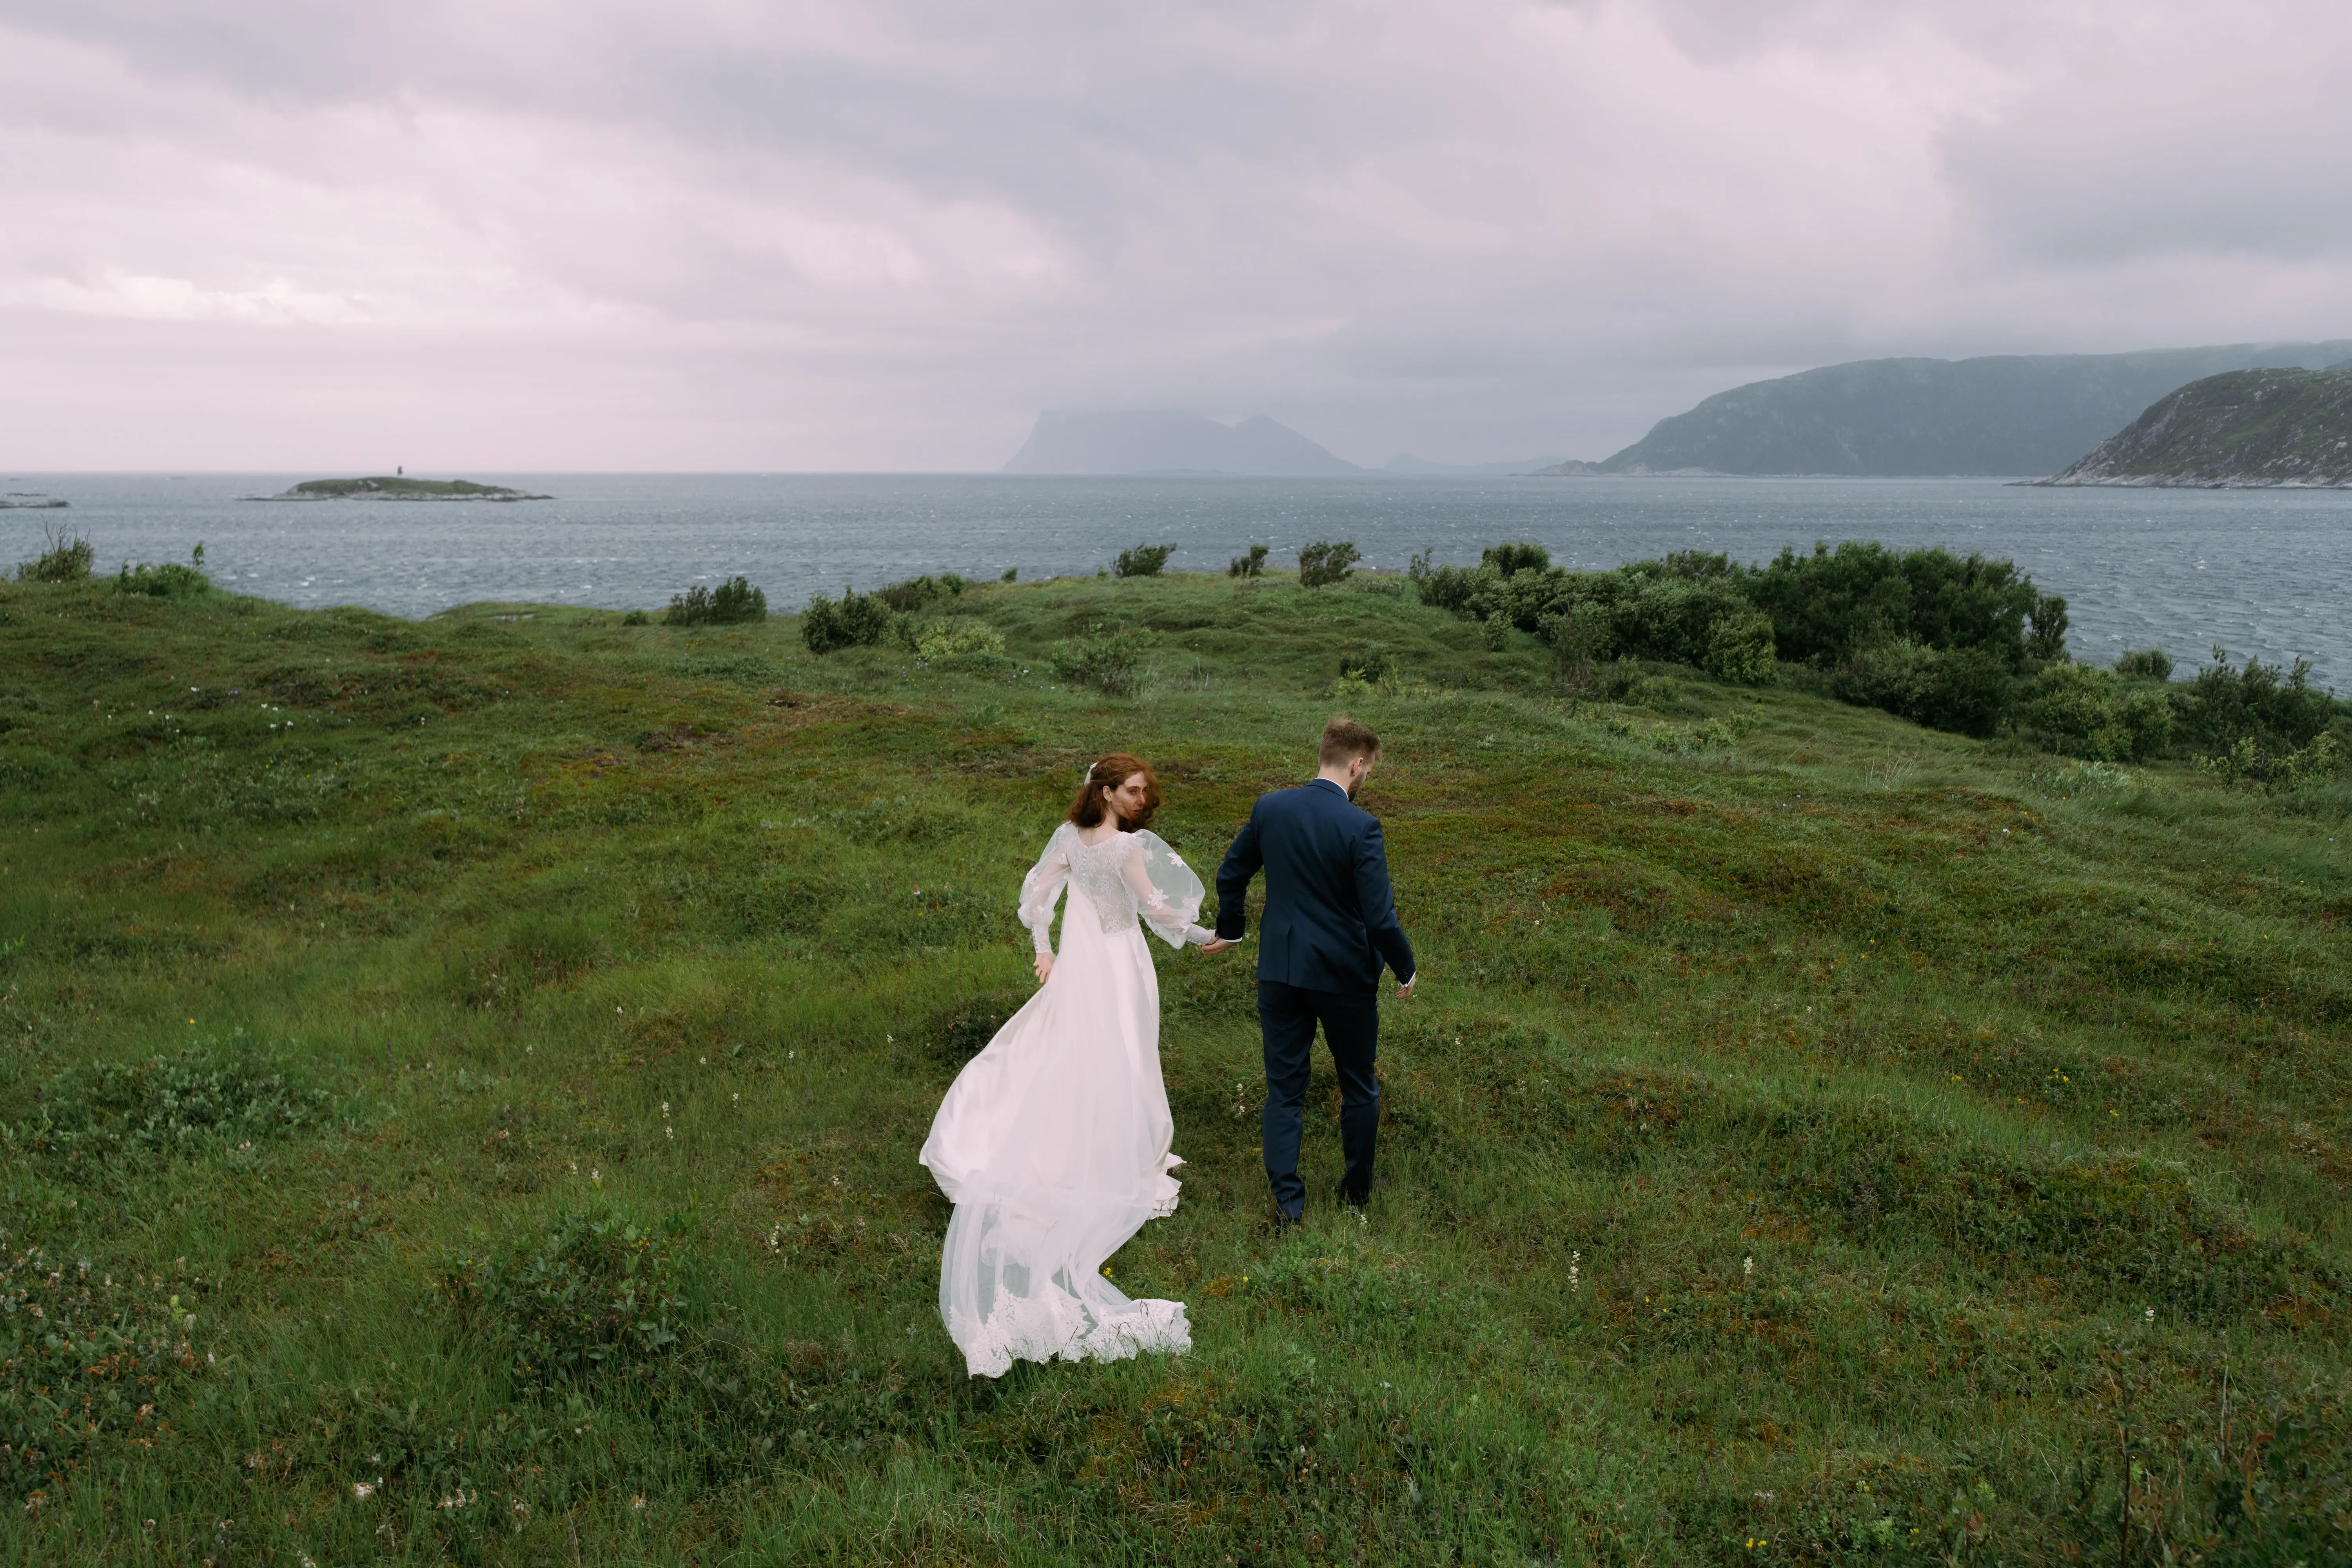 Barbara and Peder on their wedding day, walking through a meadow